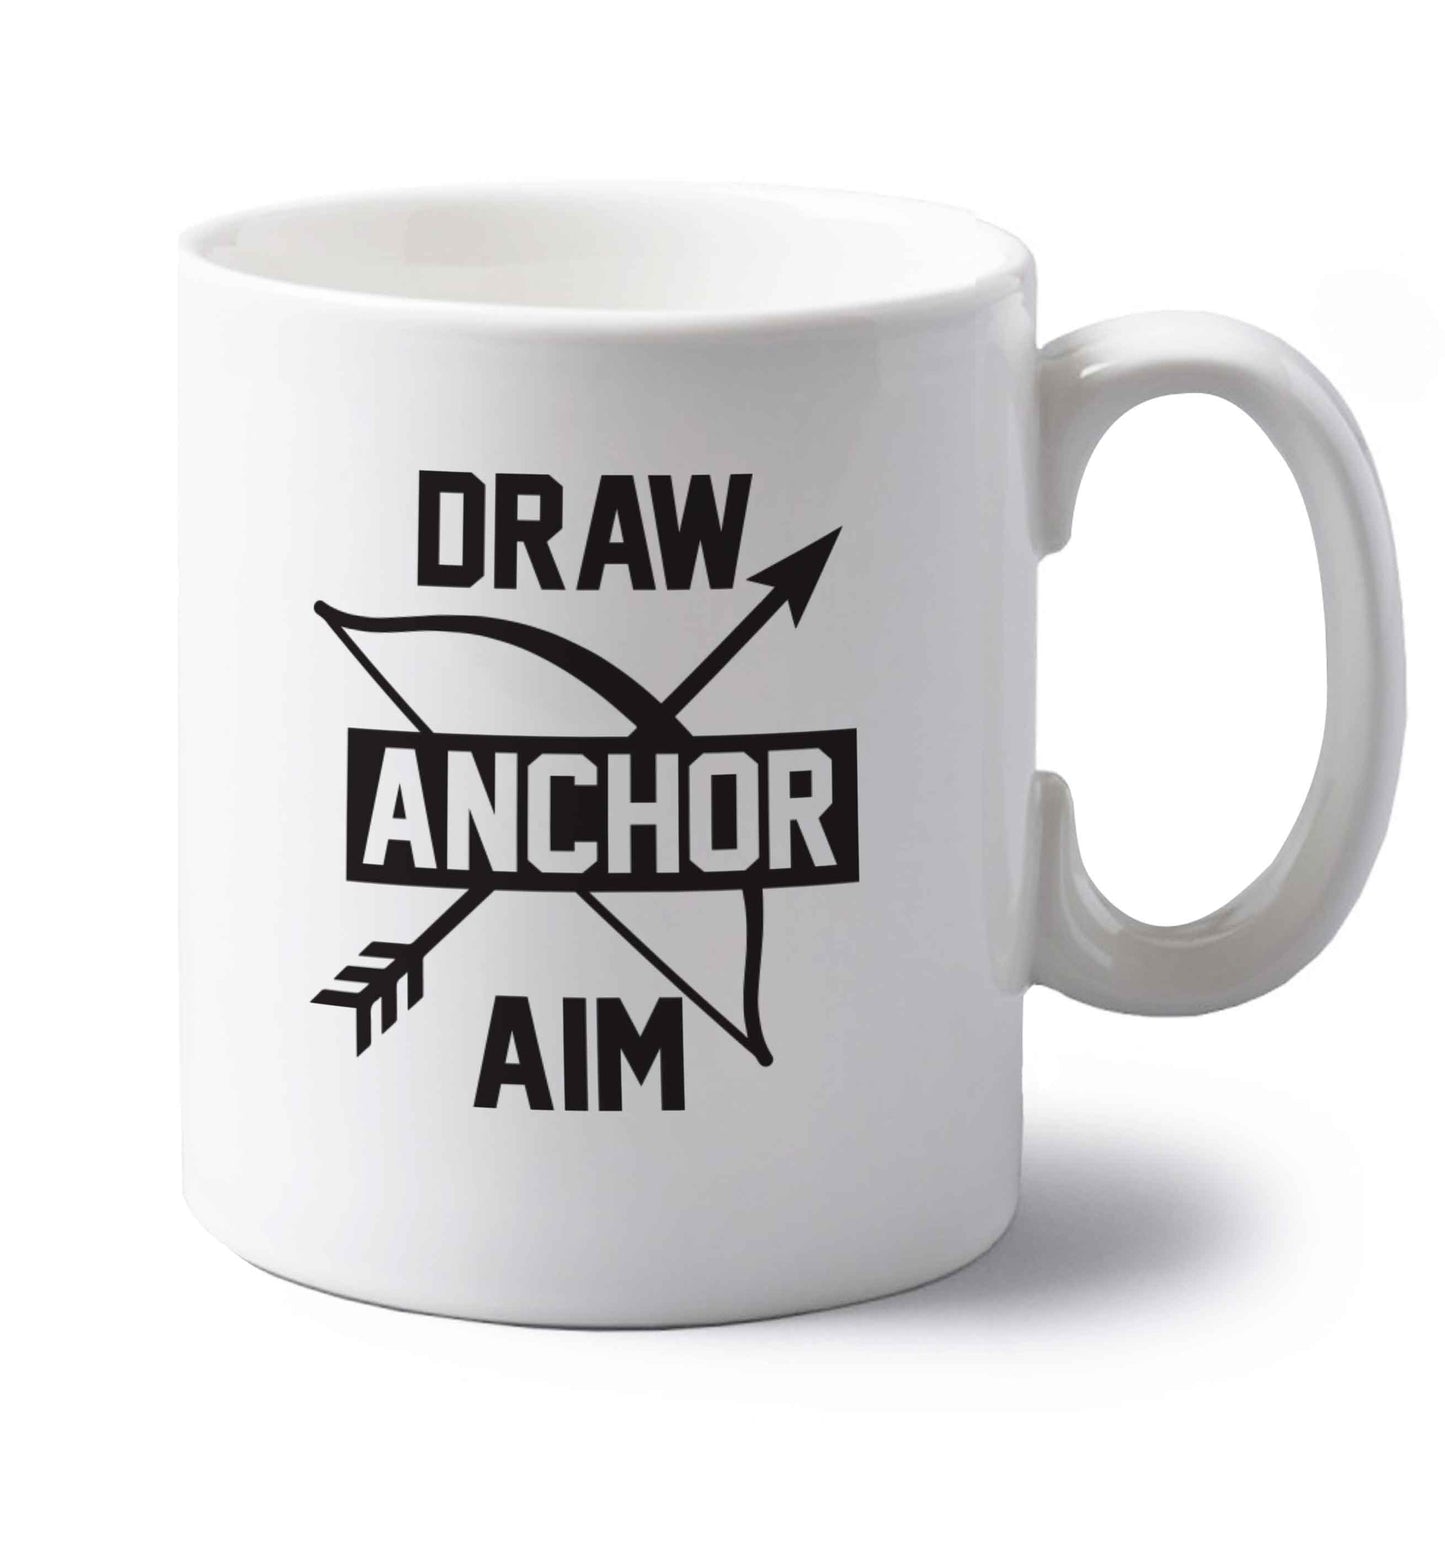 Draw anchor aim left handed white ceramic mug 